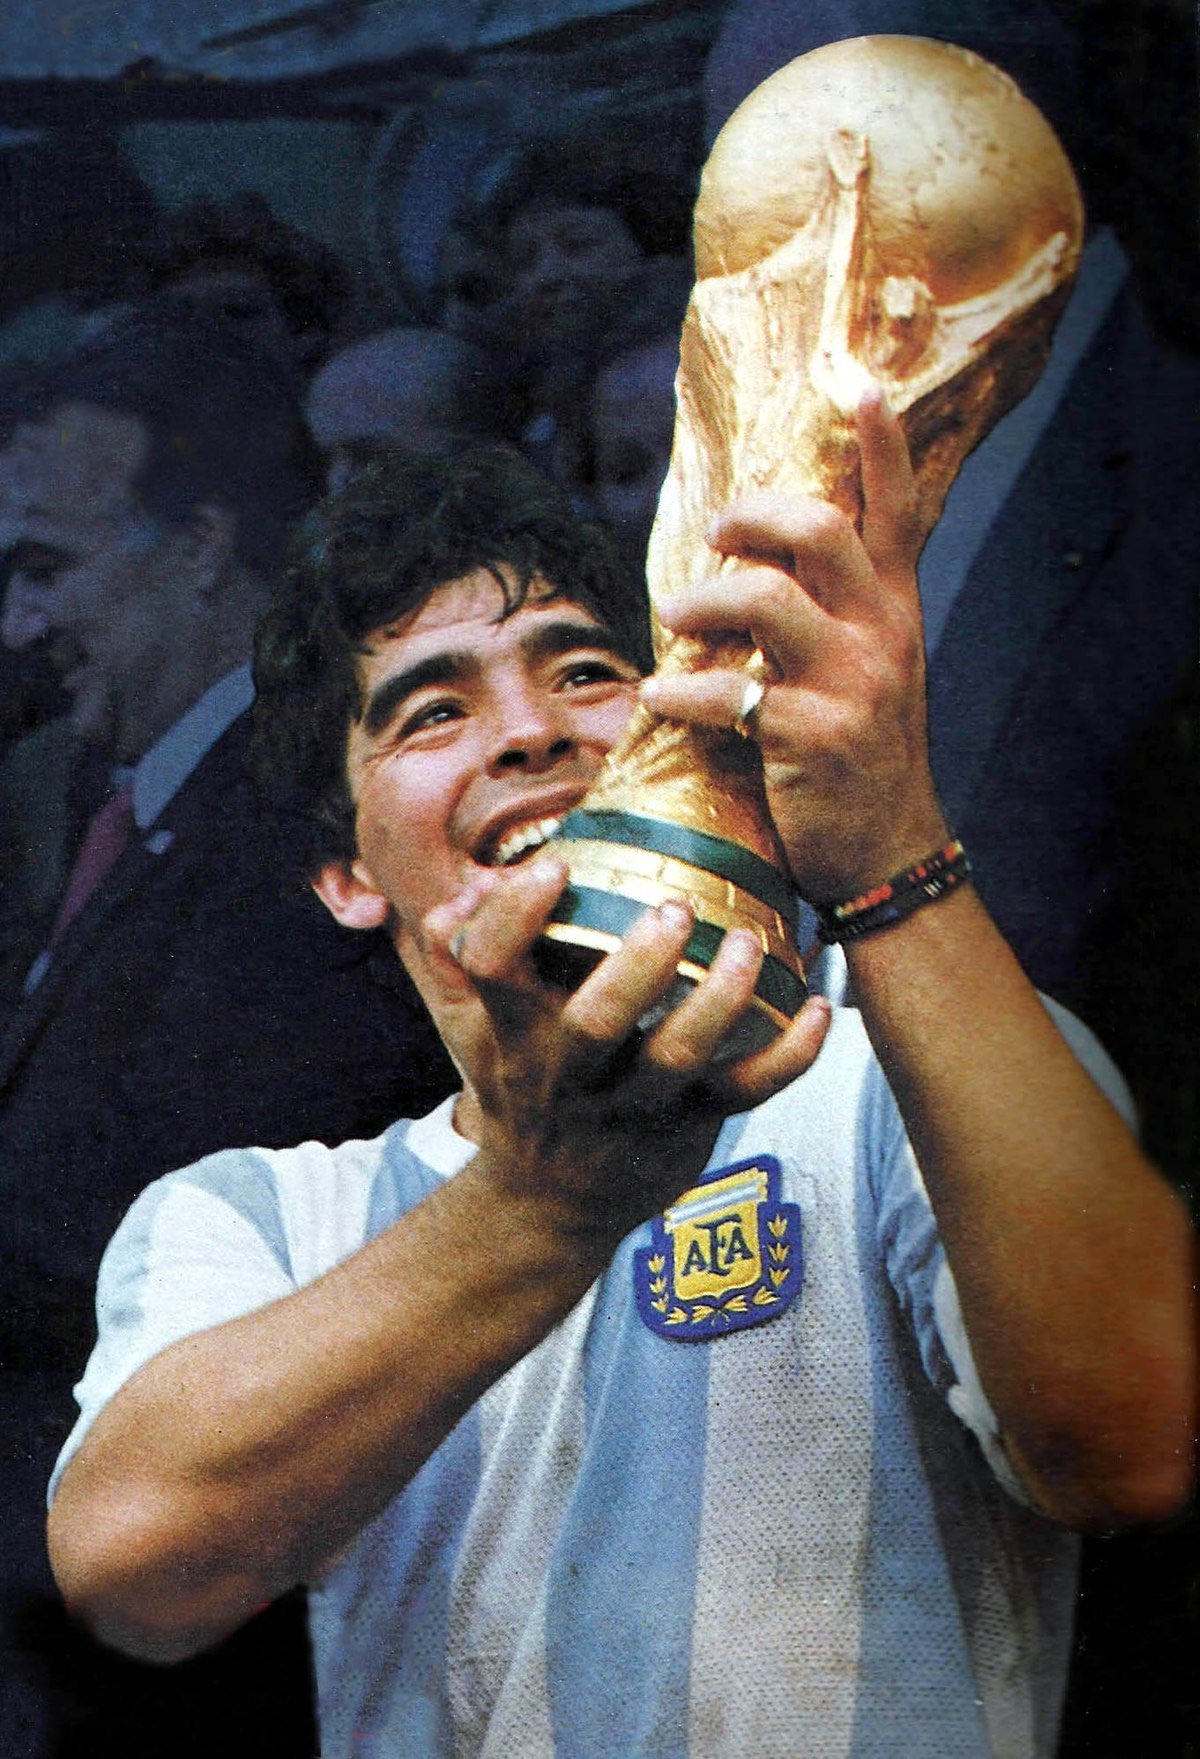  Diego Maradona. What a footballing icon and legend. 

Happy Birthday  